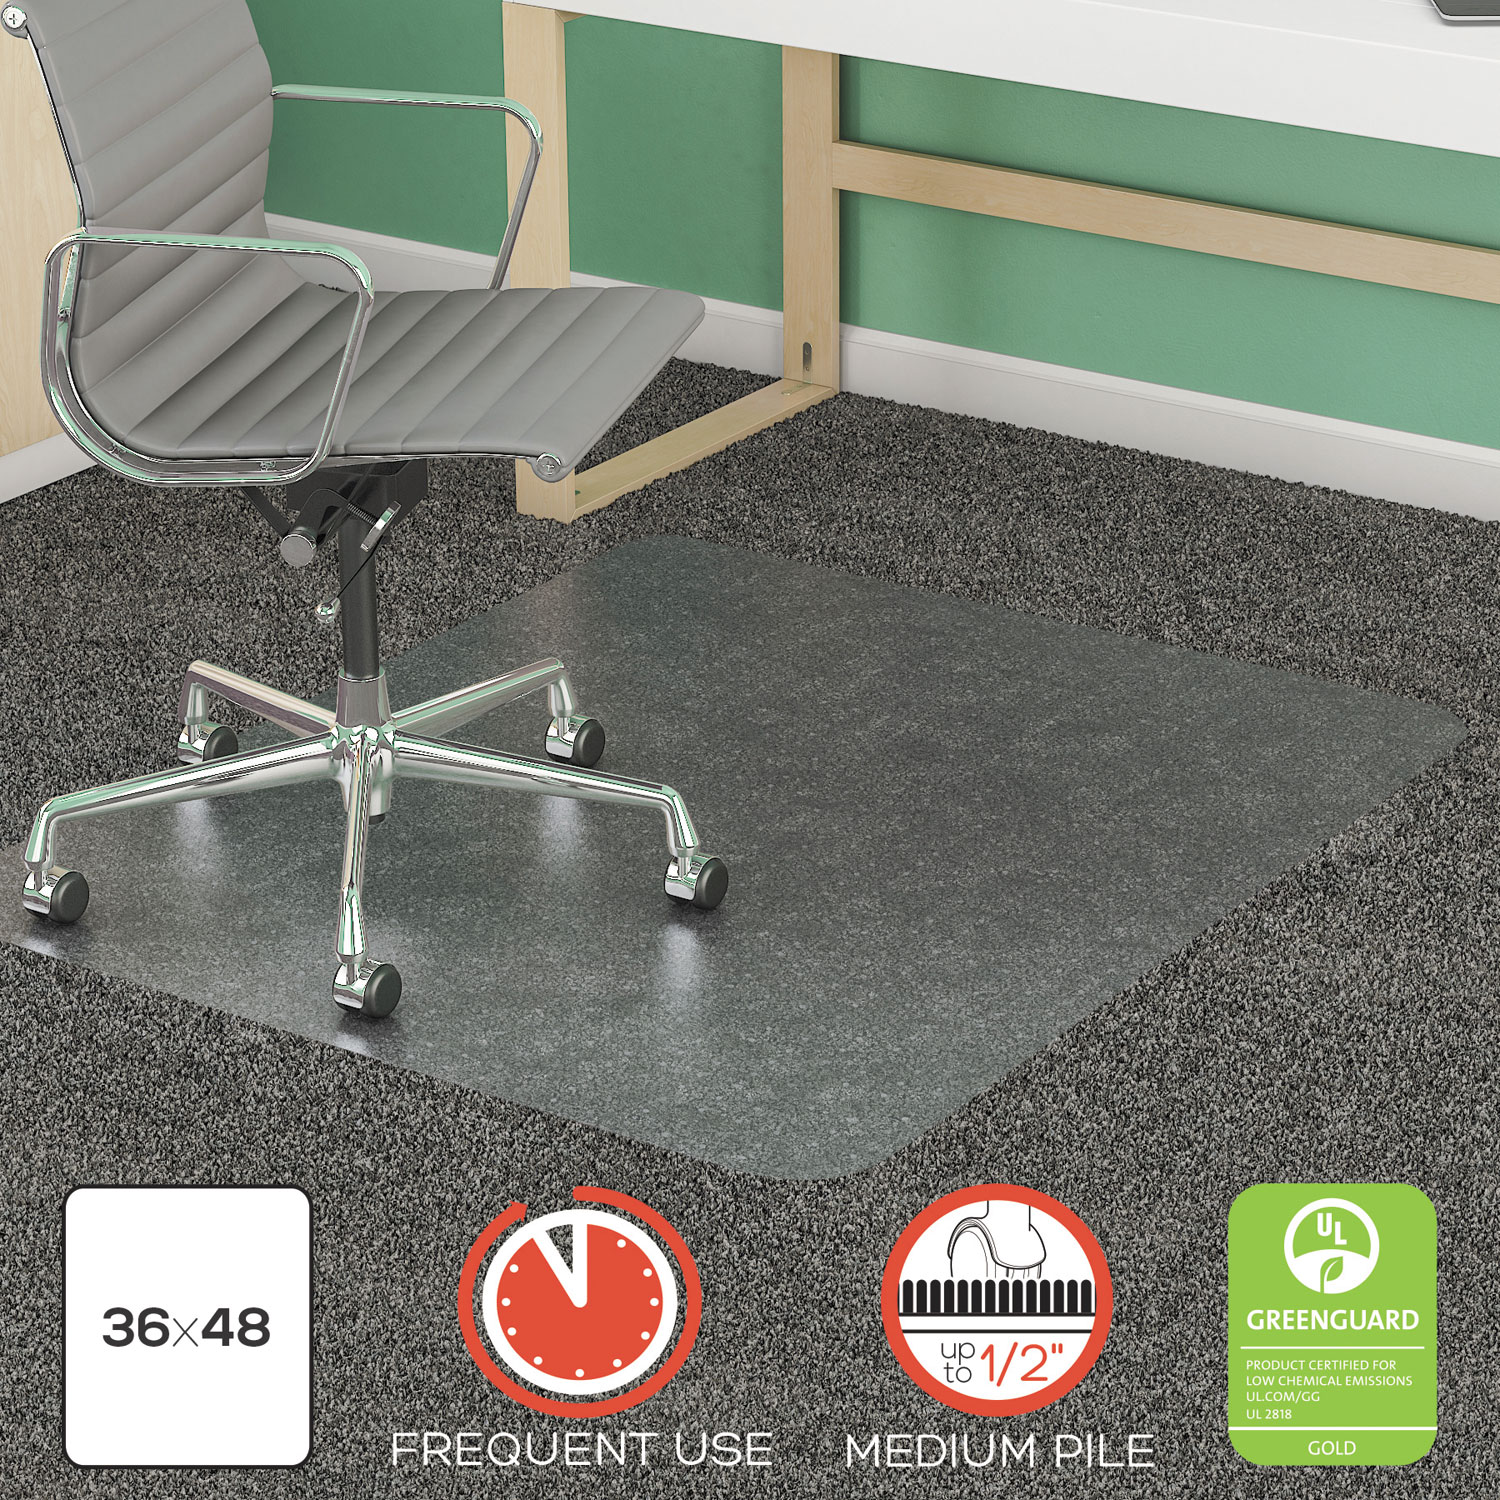 SuperMat Frequent Use Chair Mat for Medium Pile Carpet, 36 x 48, Rectangular, CR